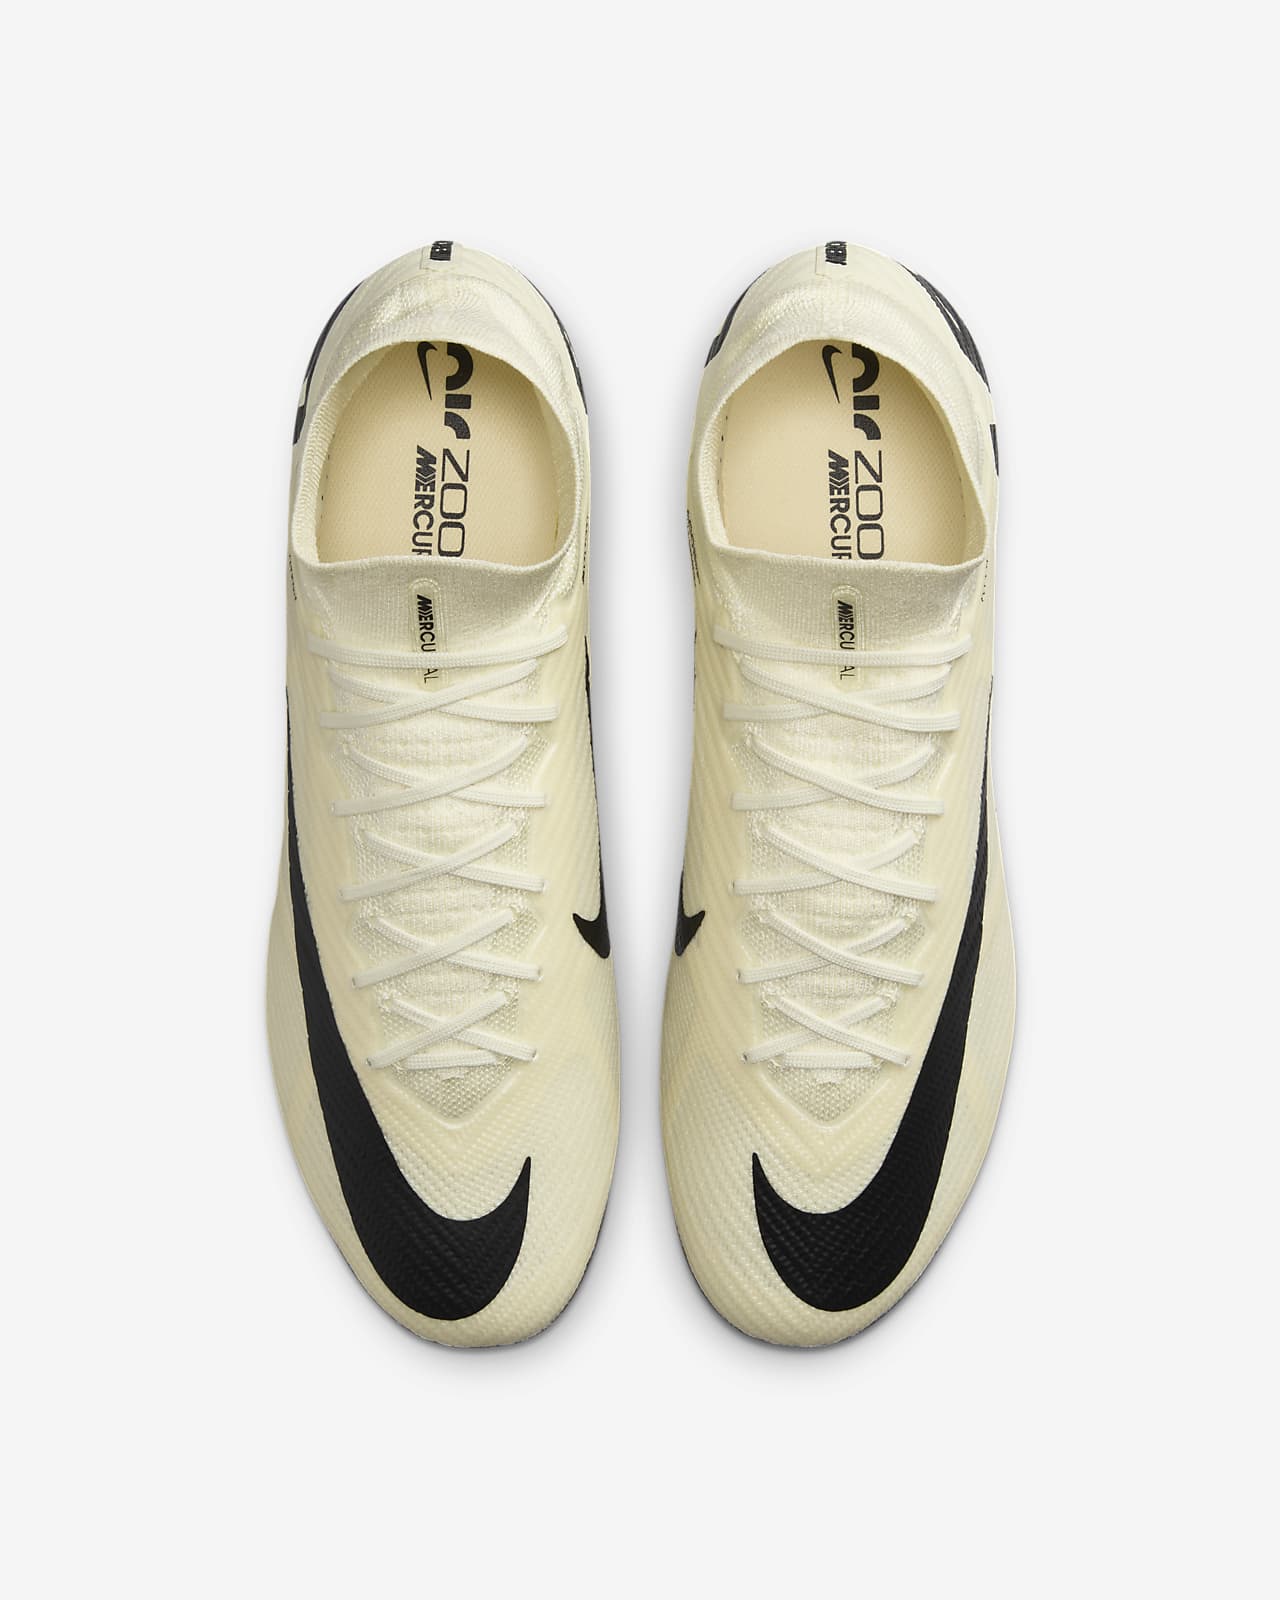 Terrain sec Football Chaussures. Nike LU